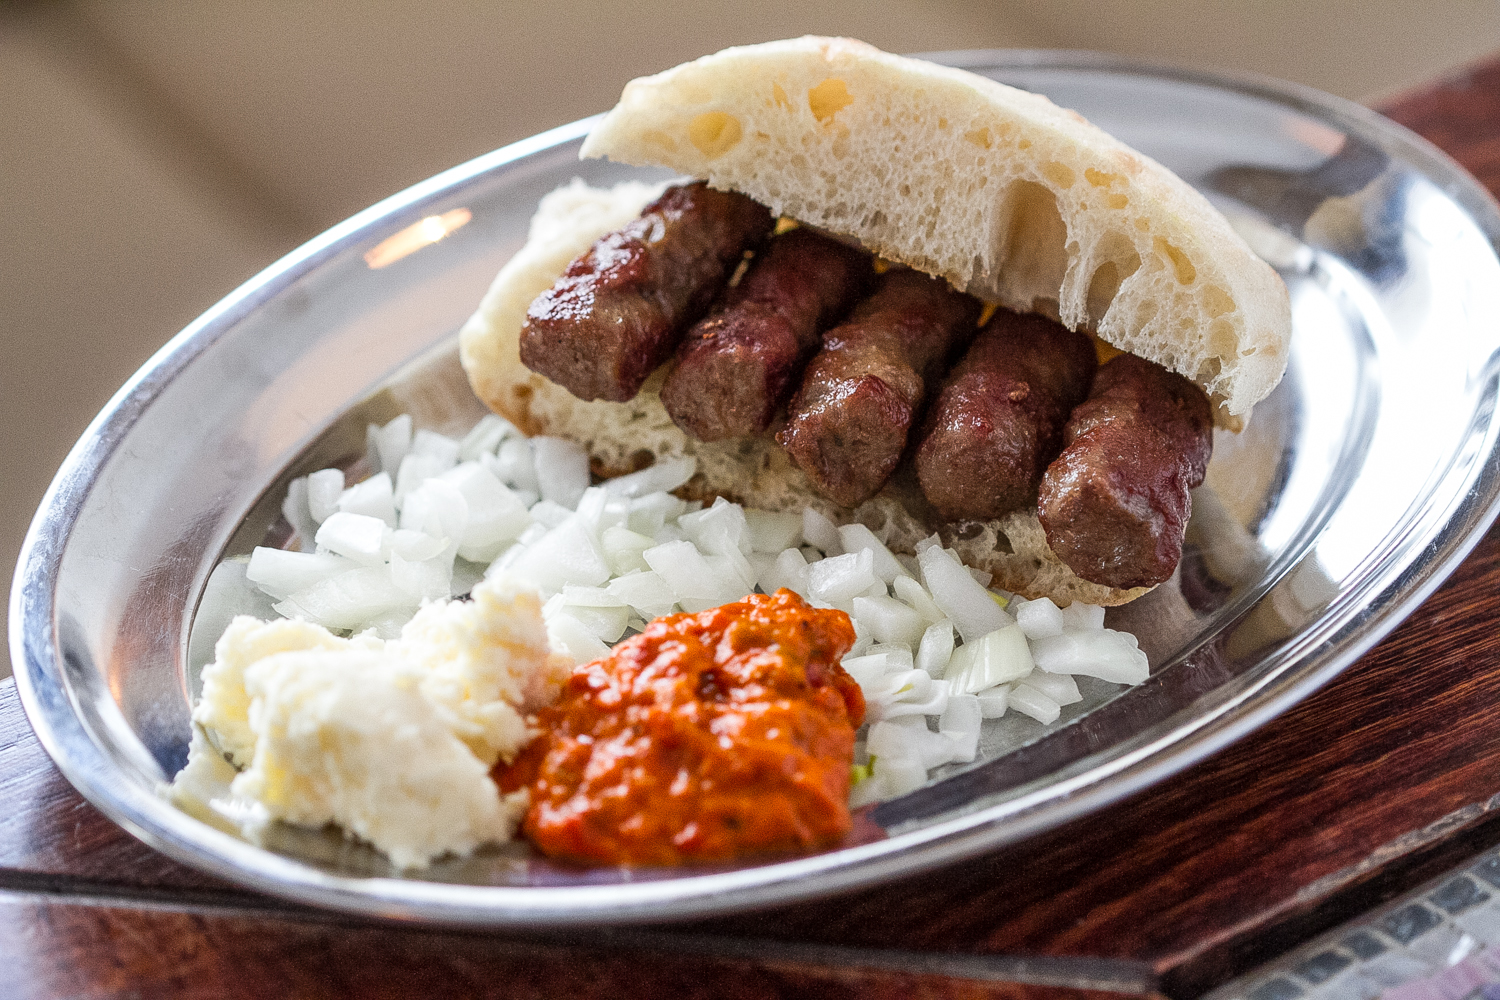 5 Budapest restaurants for savoring grilled Balkan specialties